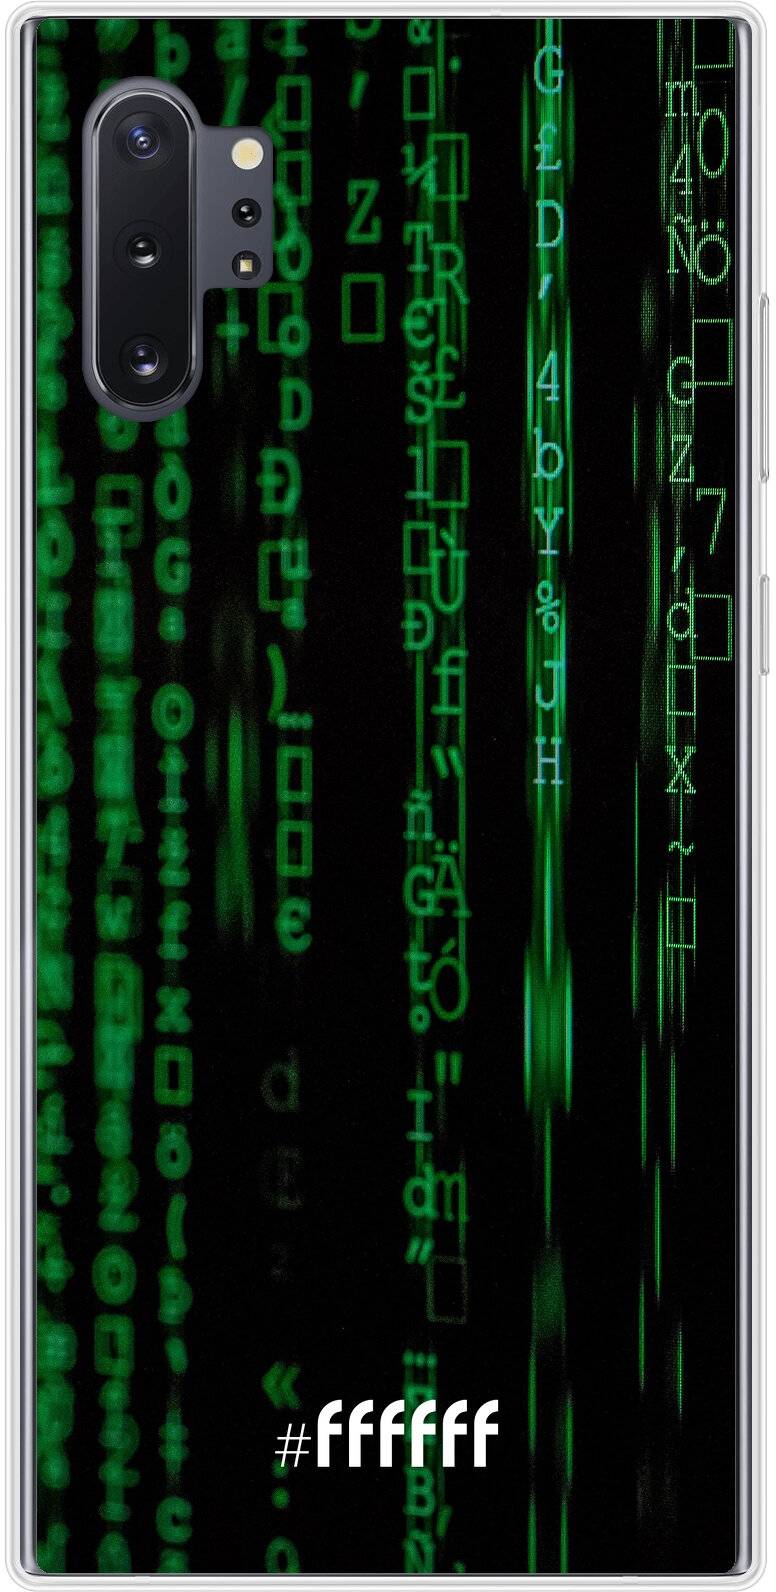 Hacking The Matrix Galaxy Note 10 Plus